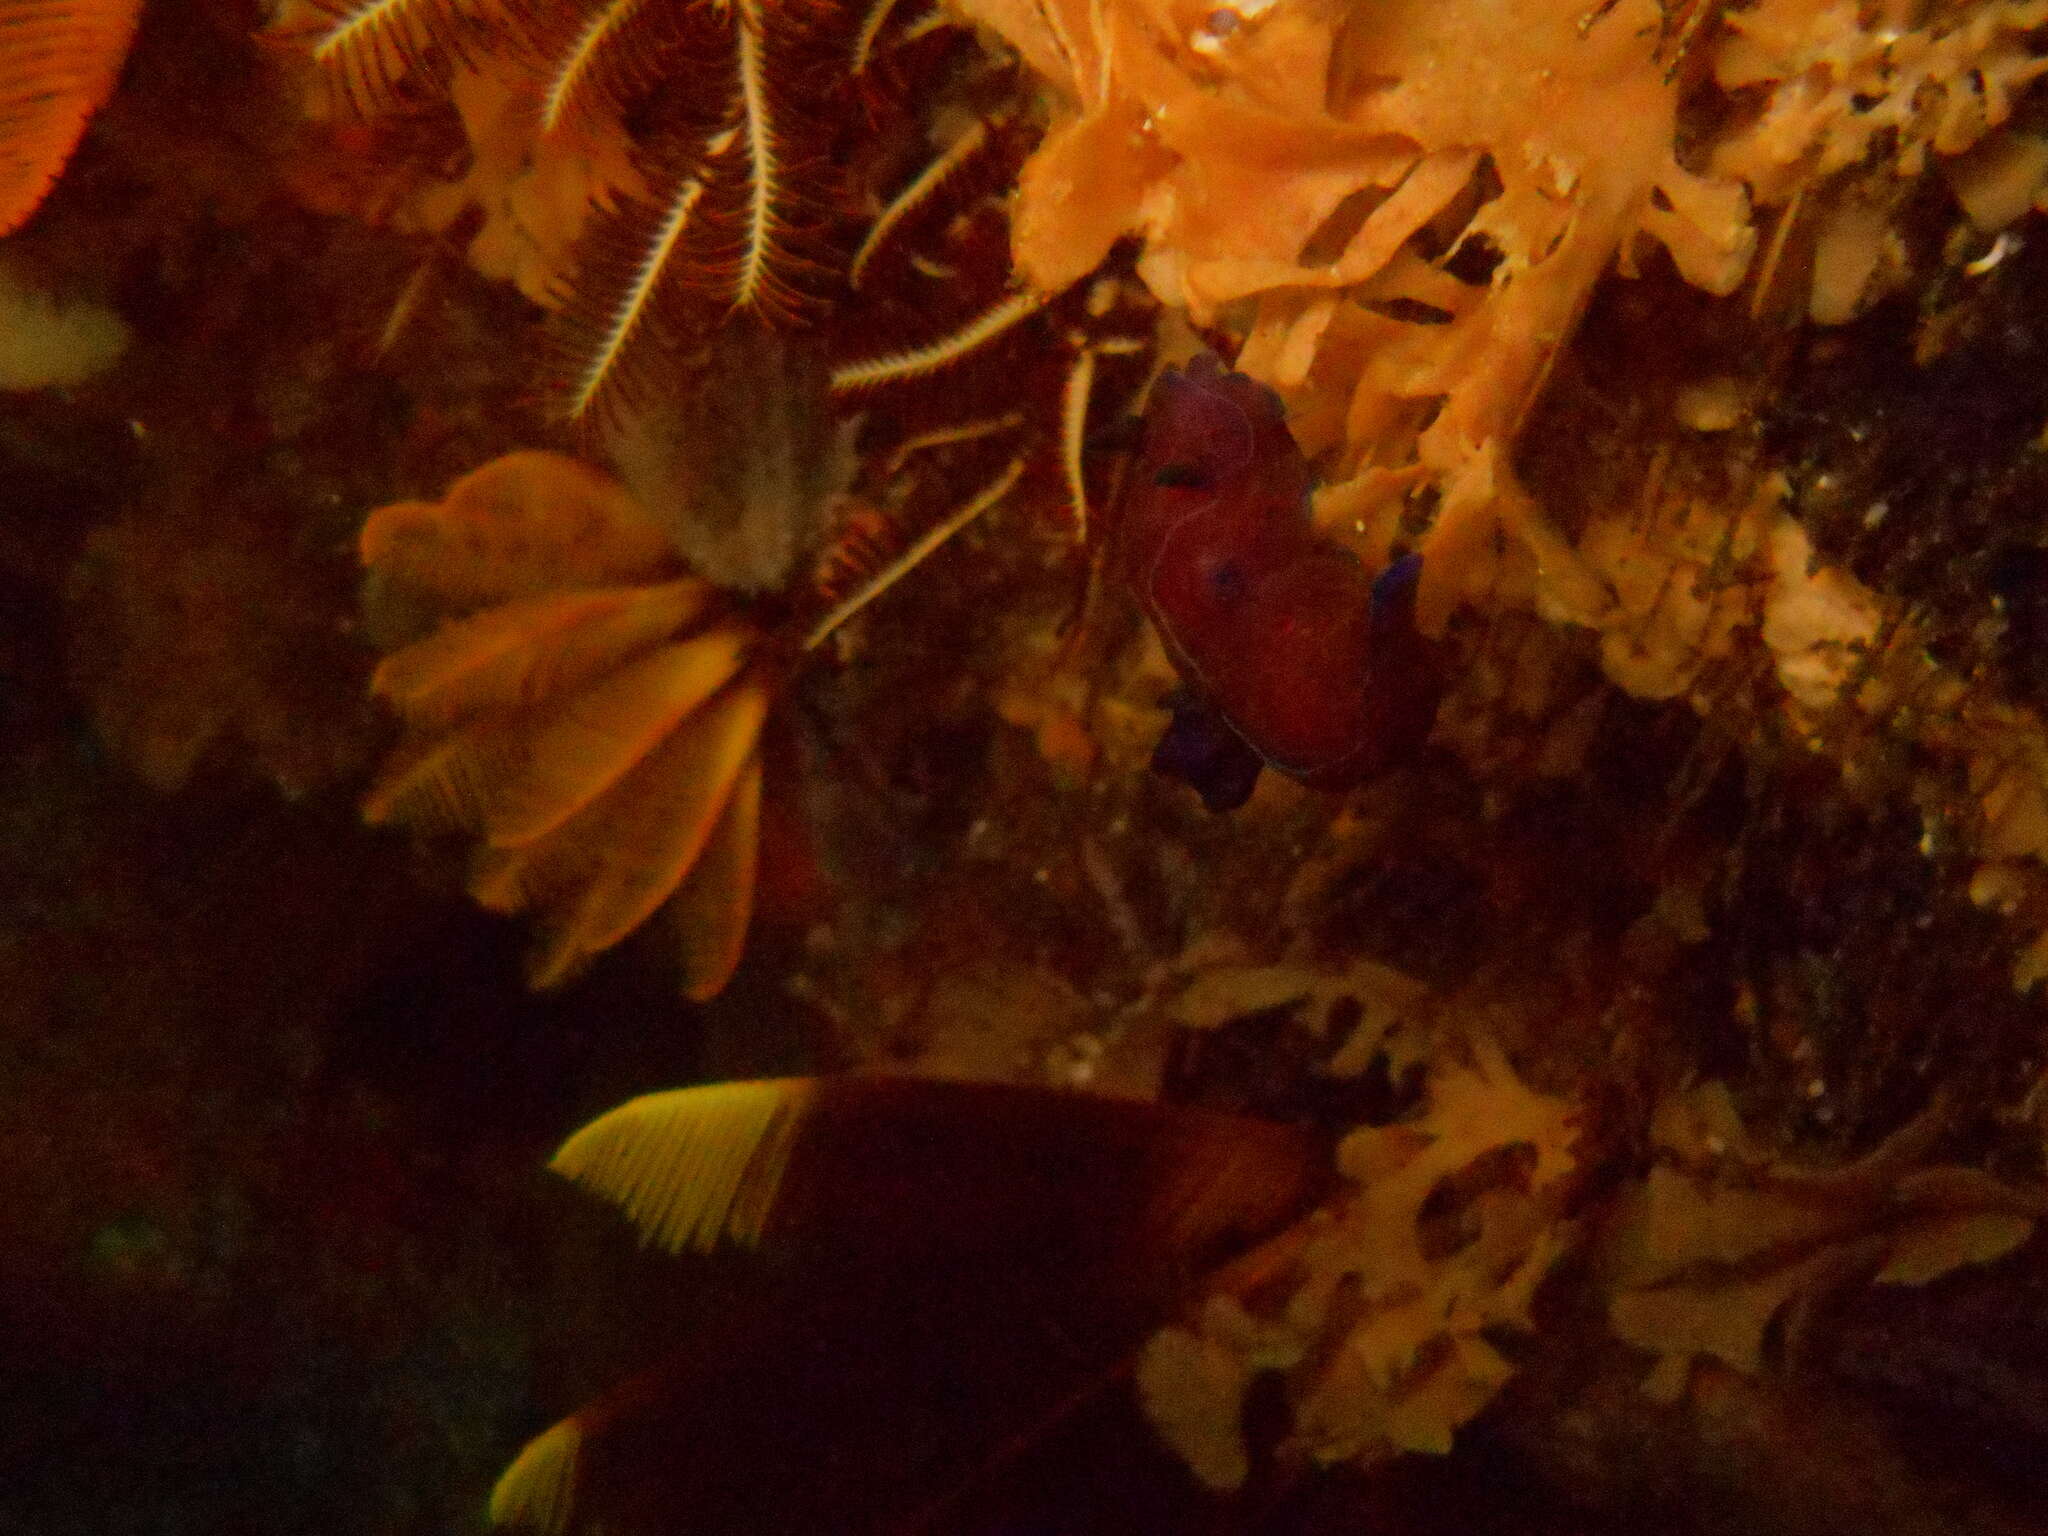 Image of Black nudibranch